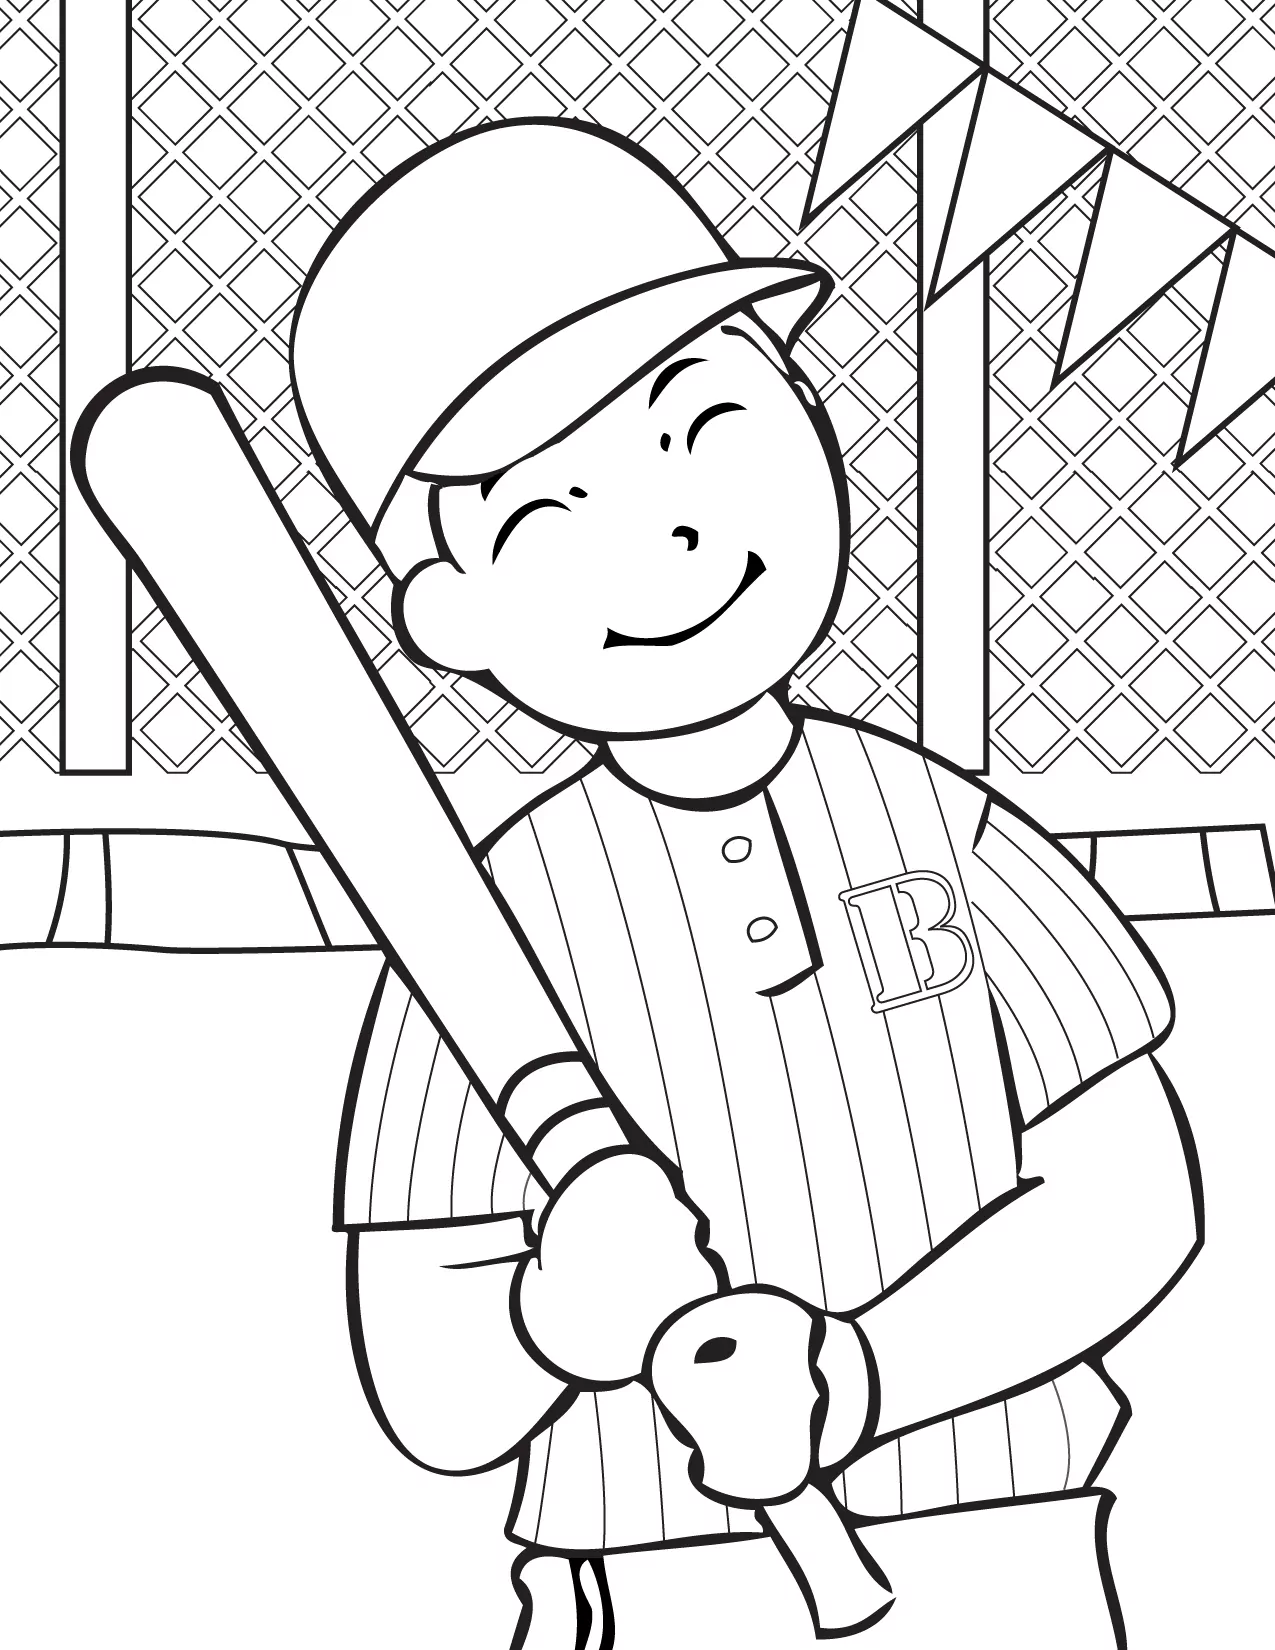 Smiling Baseball Player